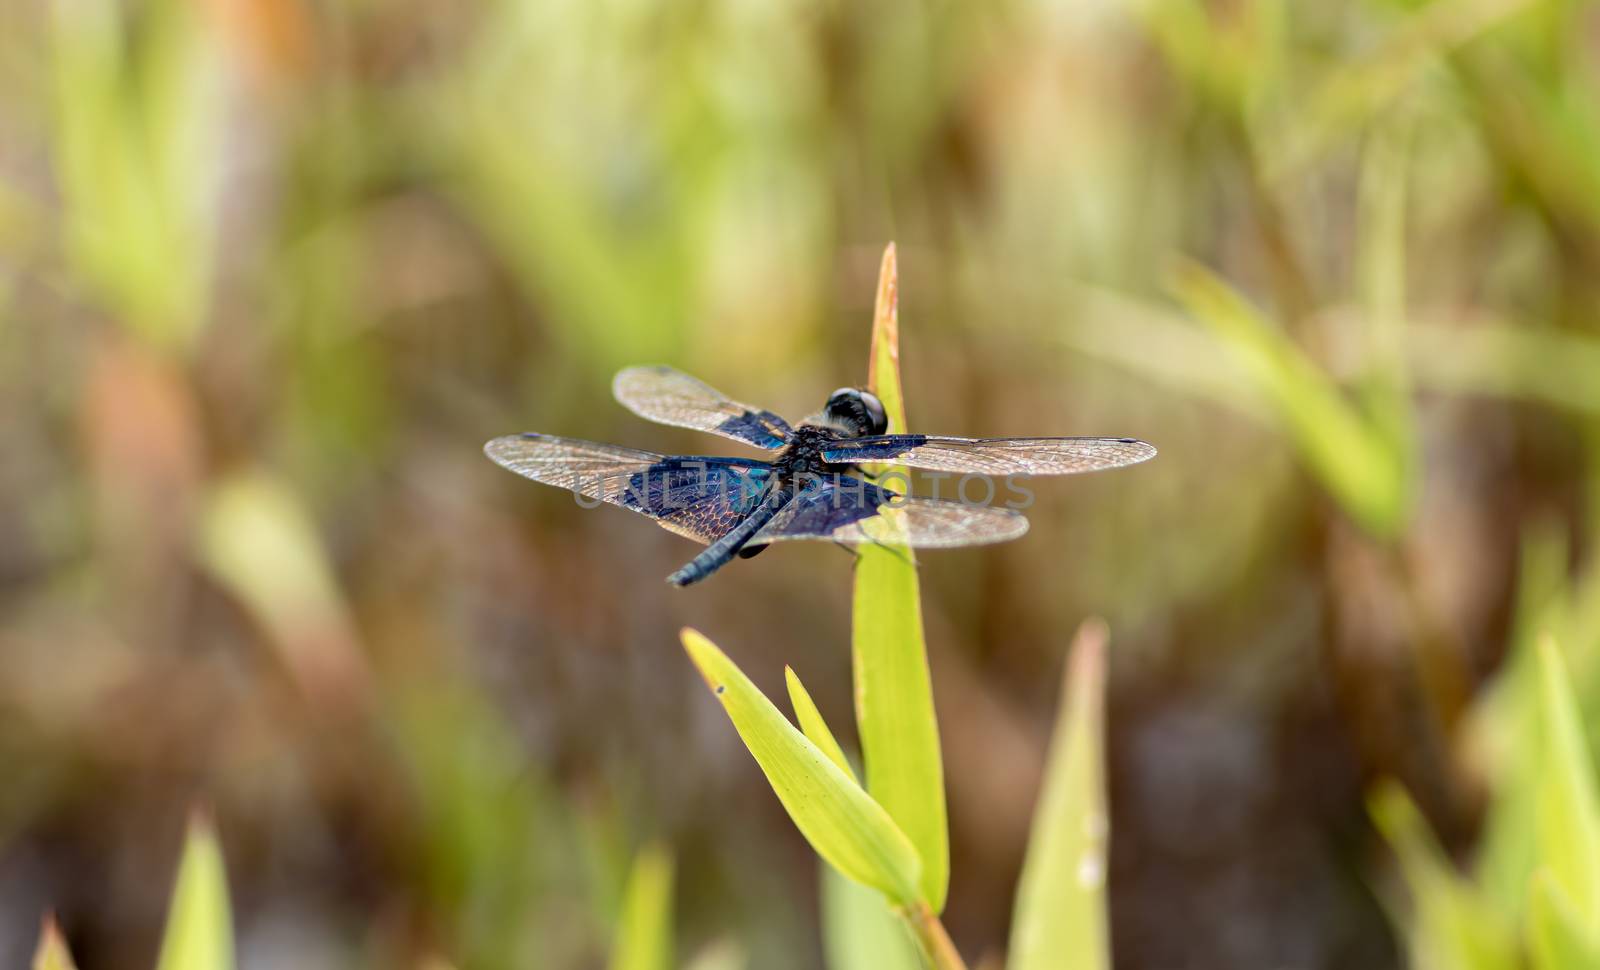 vivid colors on dragonfly wings, sunbathing in summer garden macro photography by nilanka